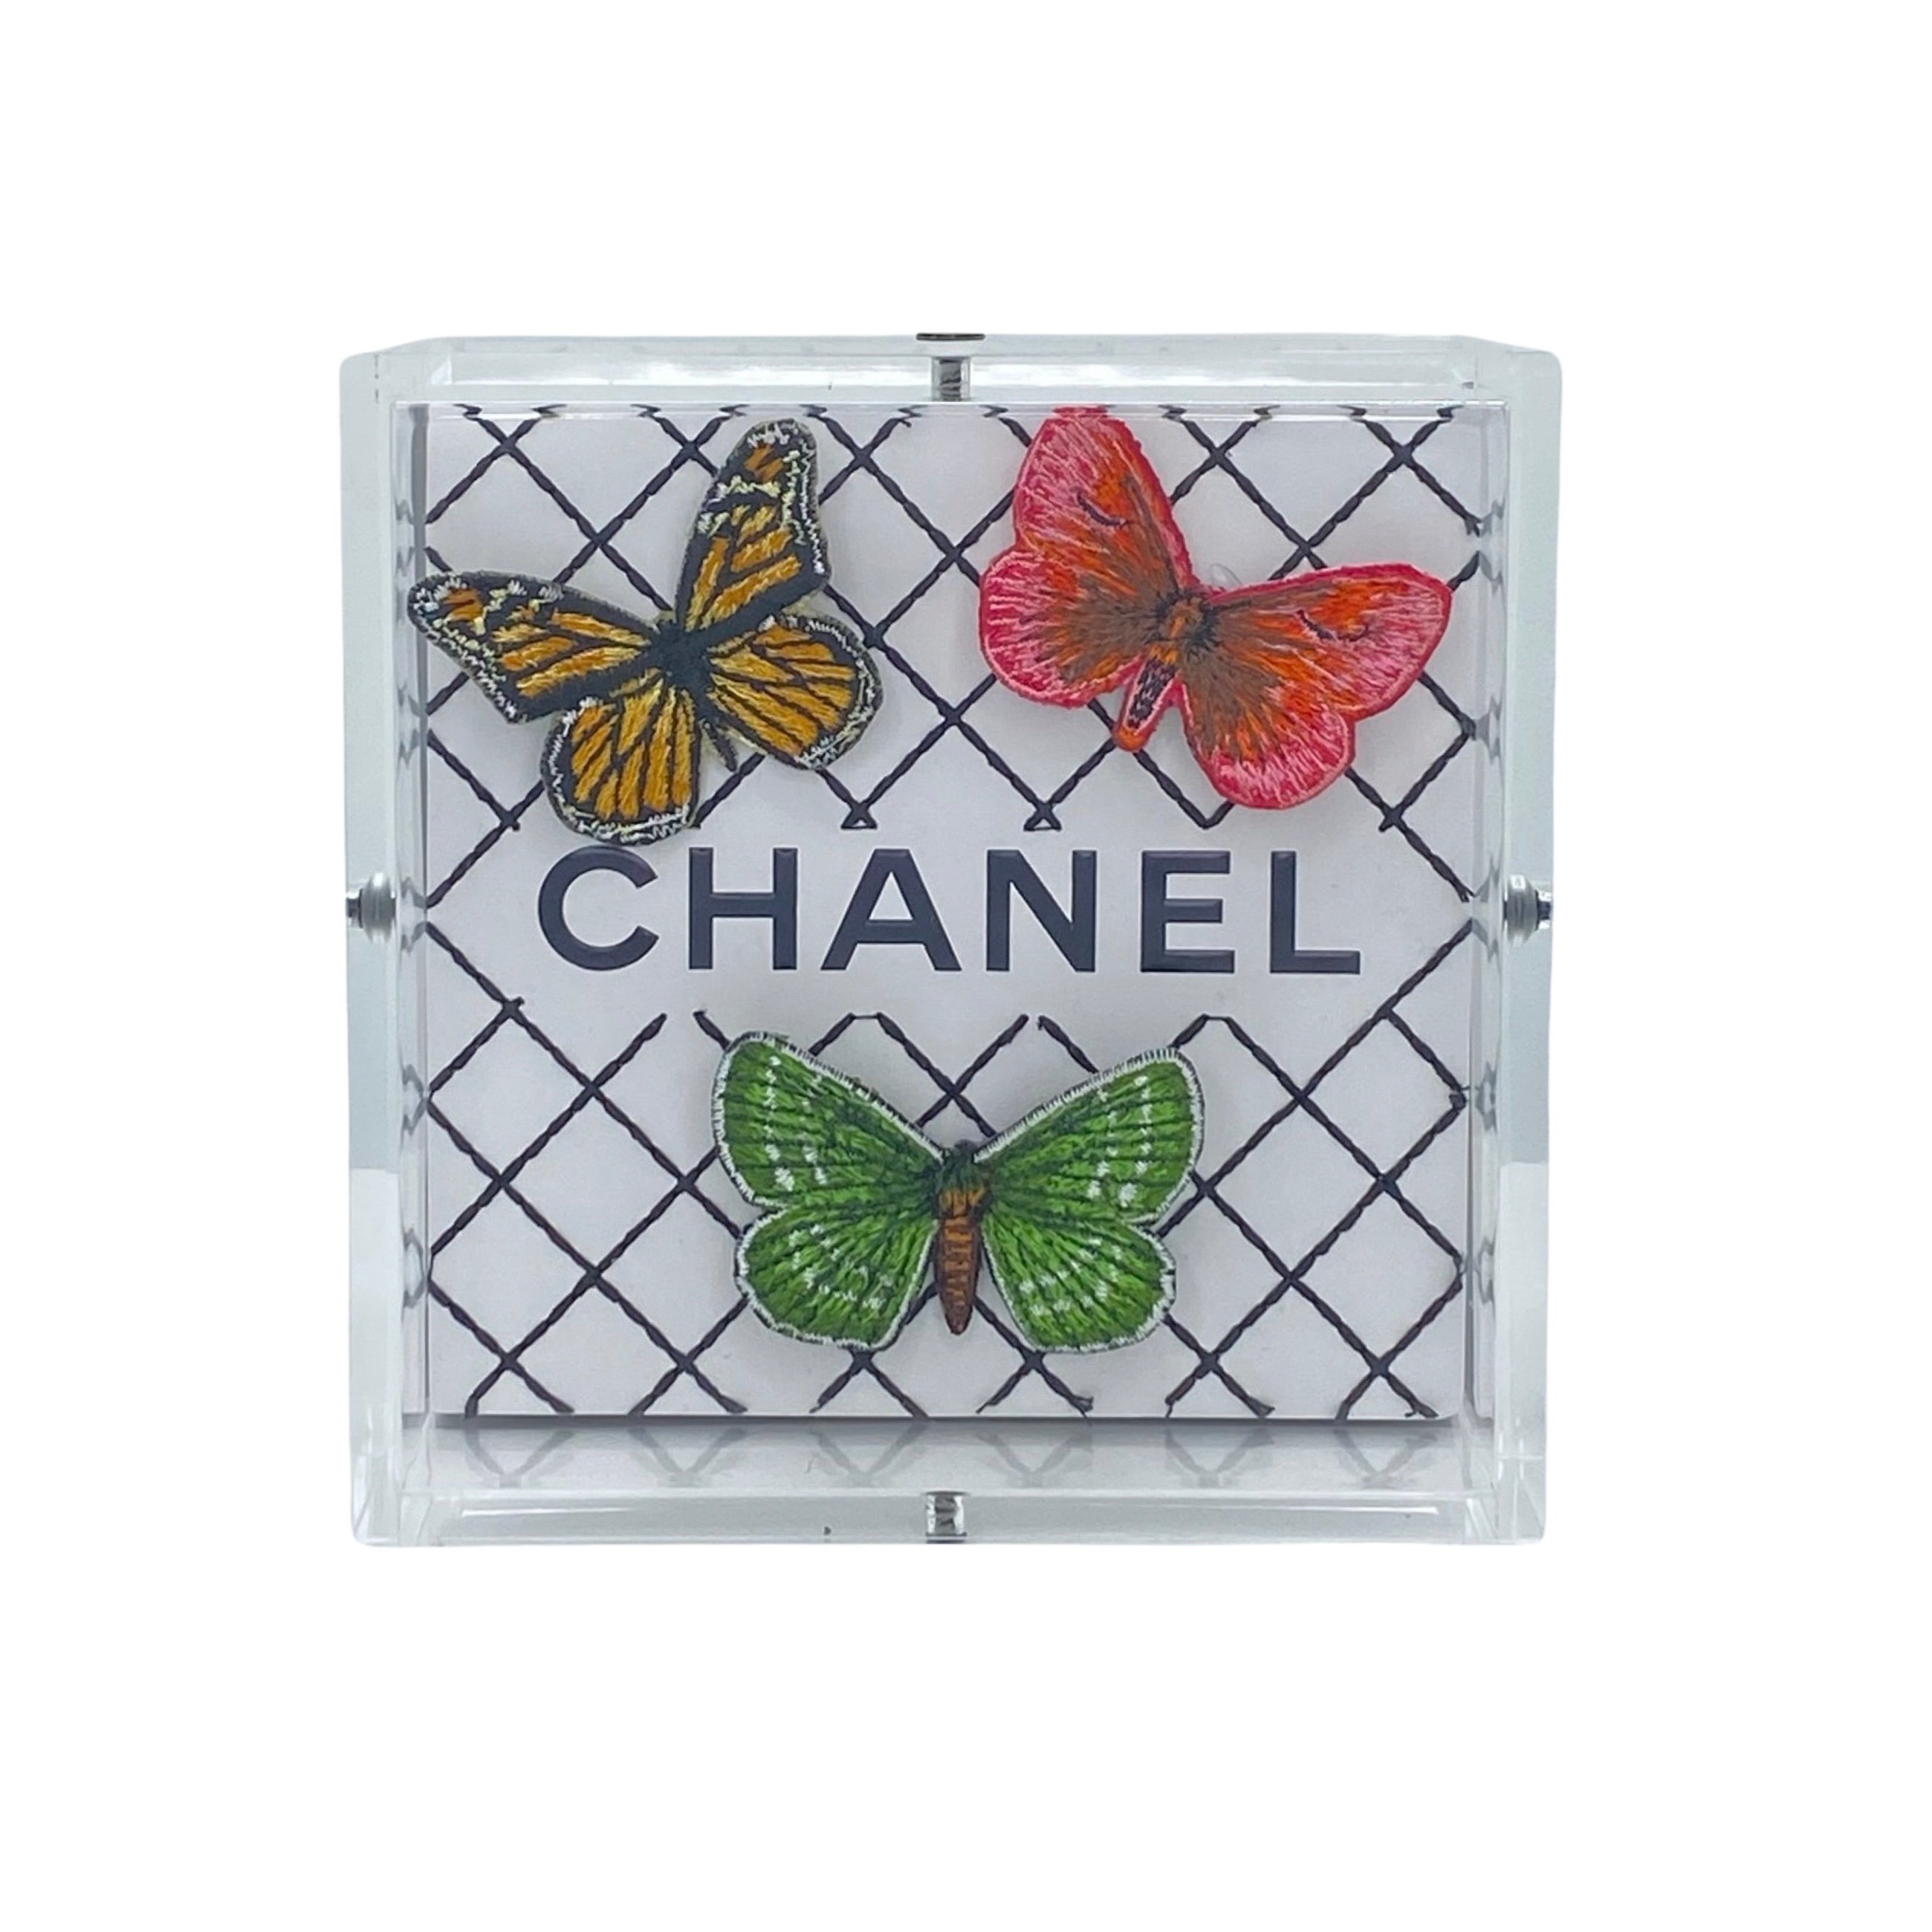 Stephen Wilson: 5x5 White Chanel Green/Pink Butterfly Swarm